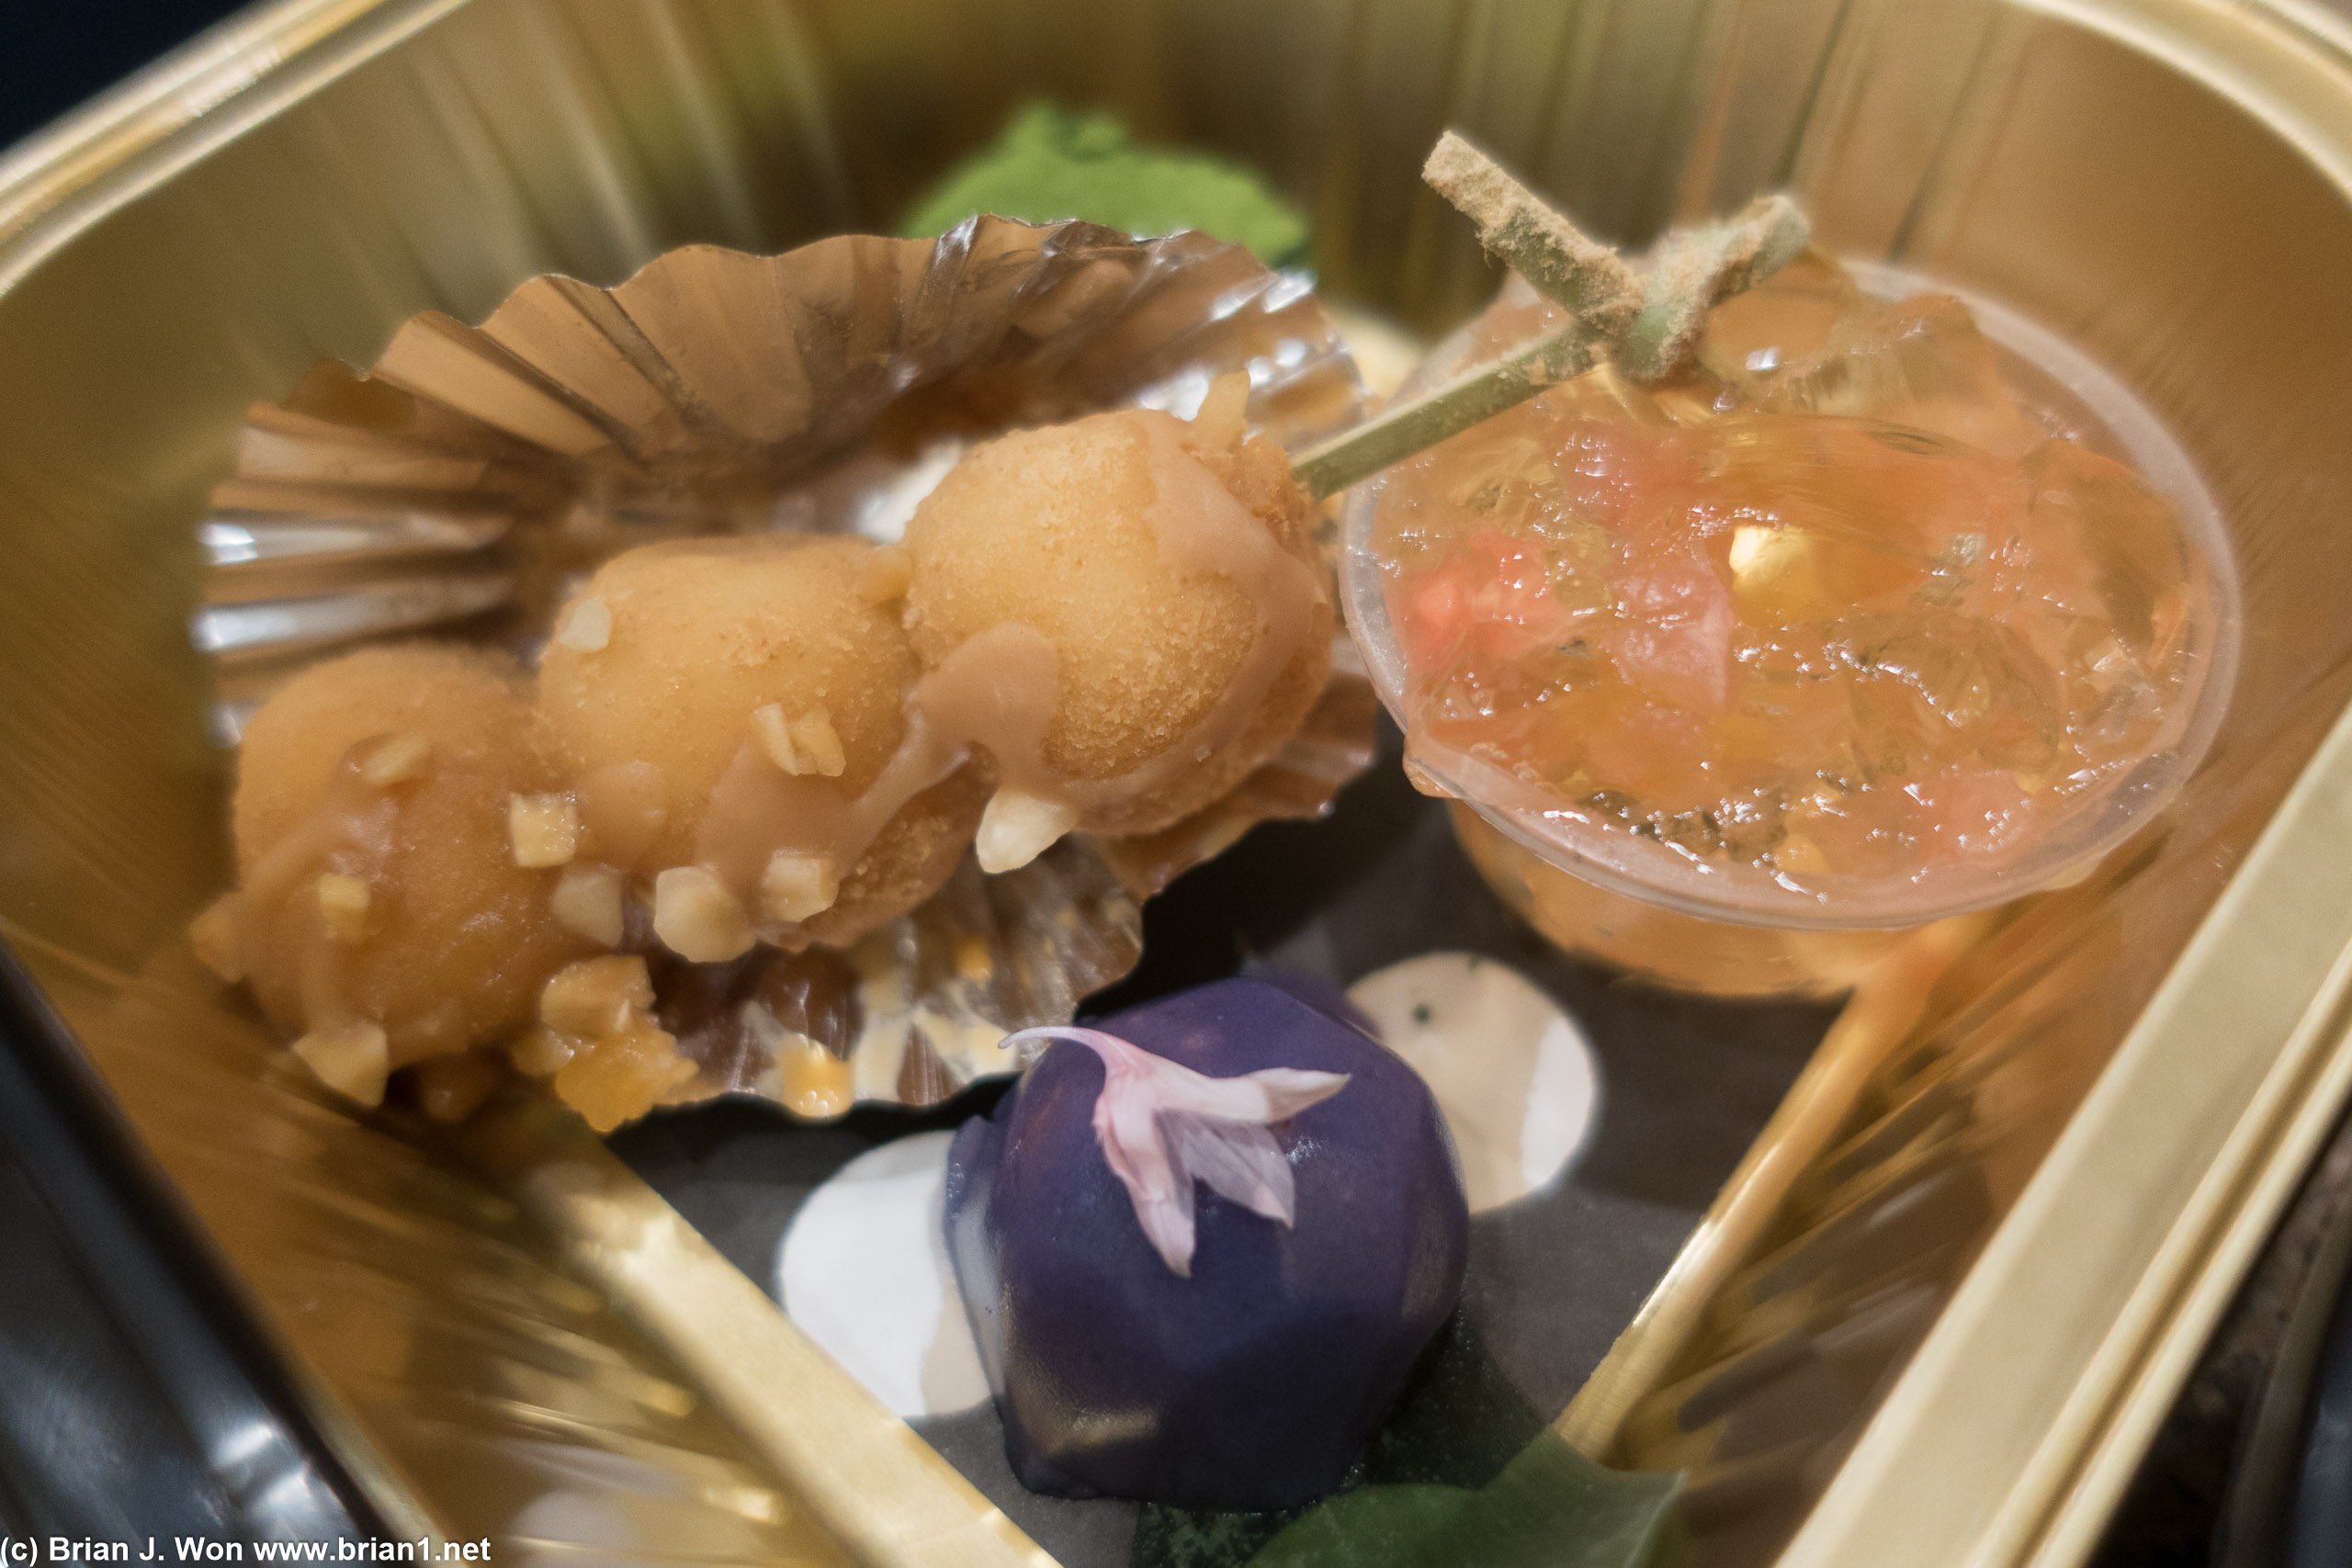 Kinako almond praline dango, murasaki imo yokan with walnuts, matcha nama dark chocolate, citrus and muscat grape jelly.